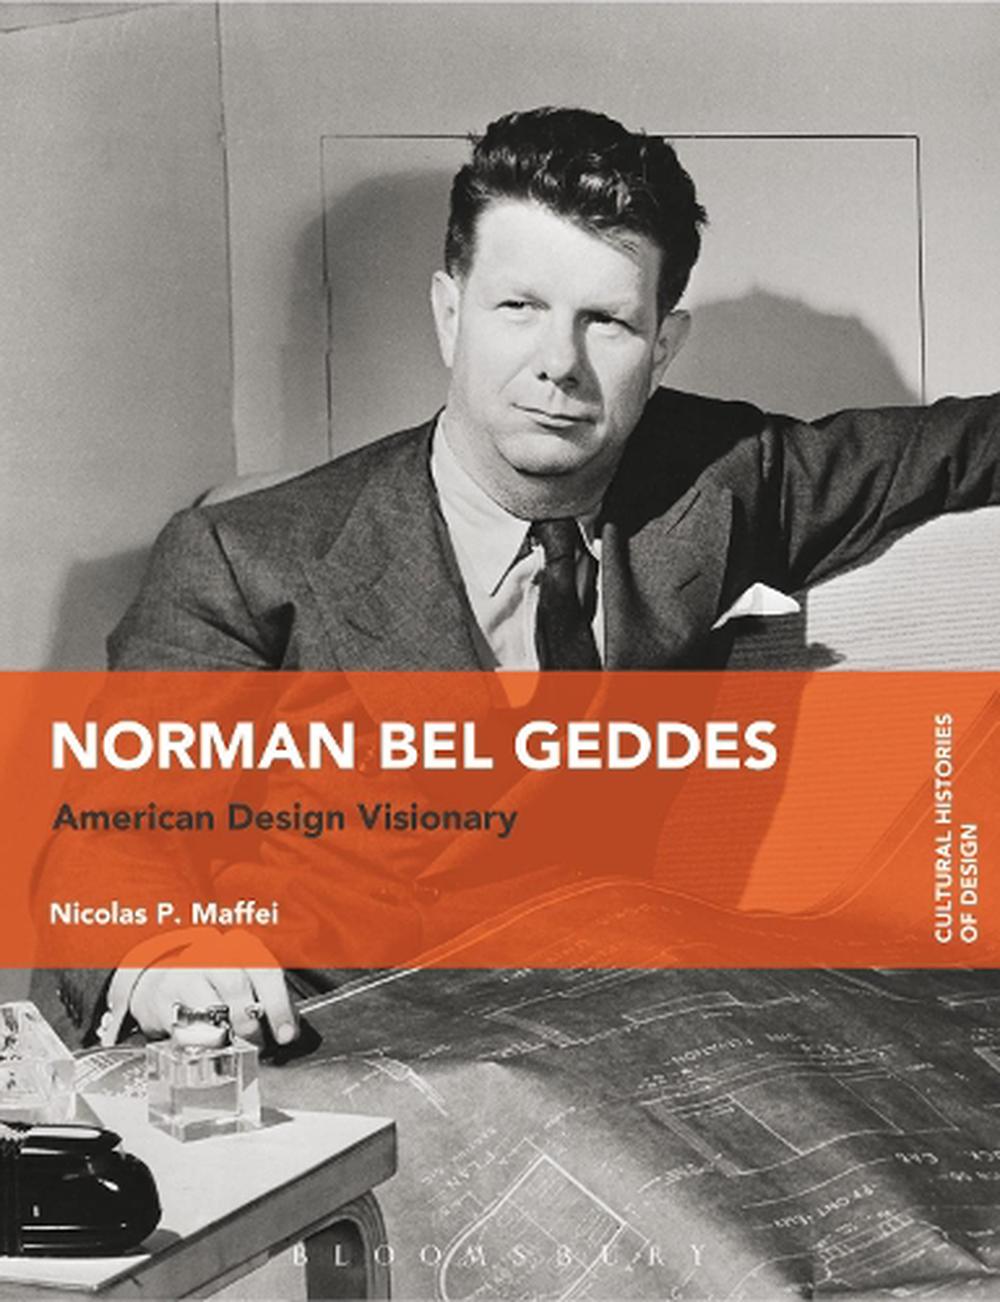 Norman Bel Geddes: American Design Visionary by Nicolas Maffei ...